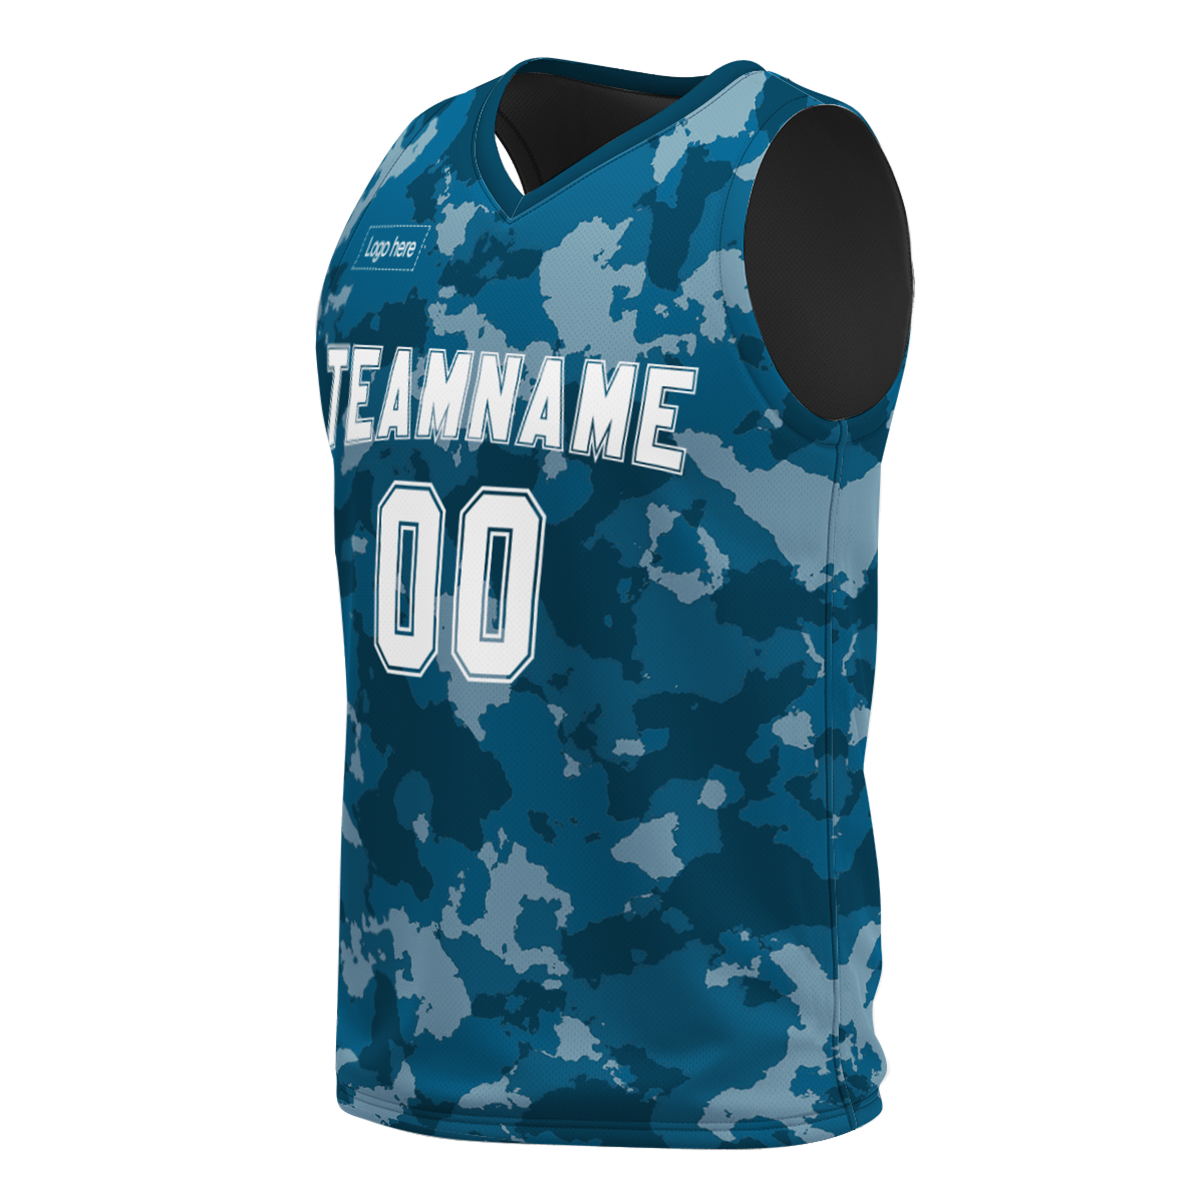 custom-full-sublimation-college-basketball-jersey-uniforms-set-oem-service-print-on-demand-basketball-suits-at-cj-pod-5